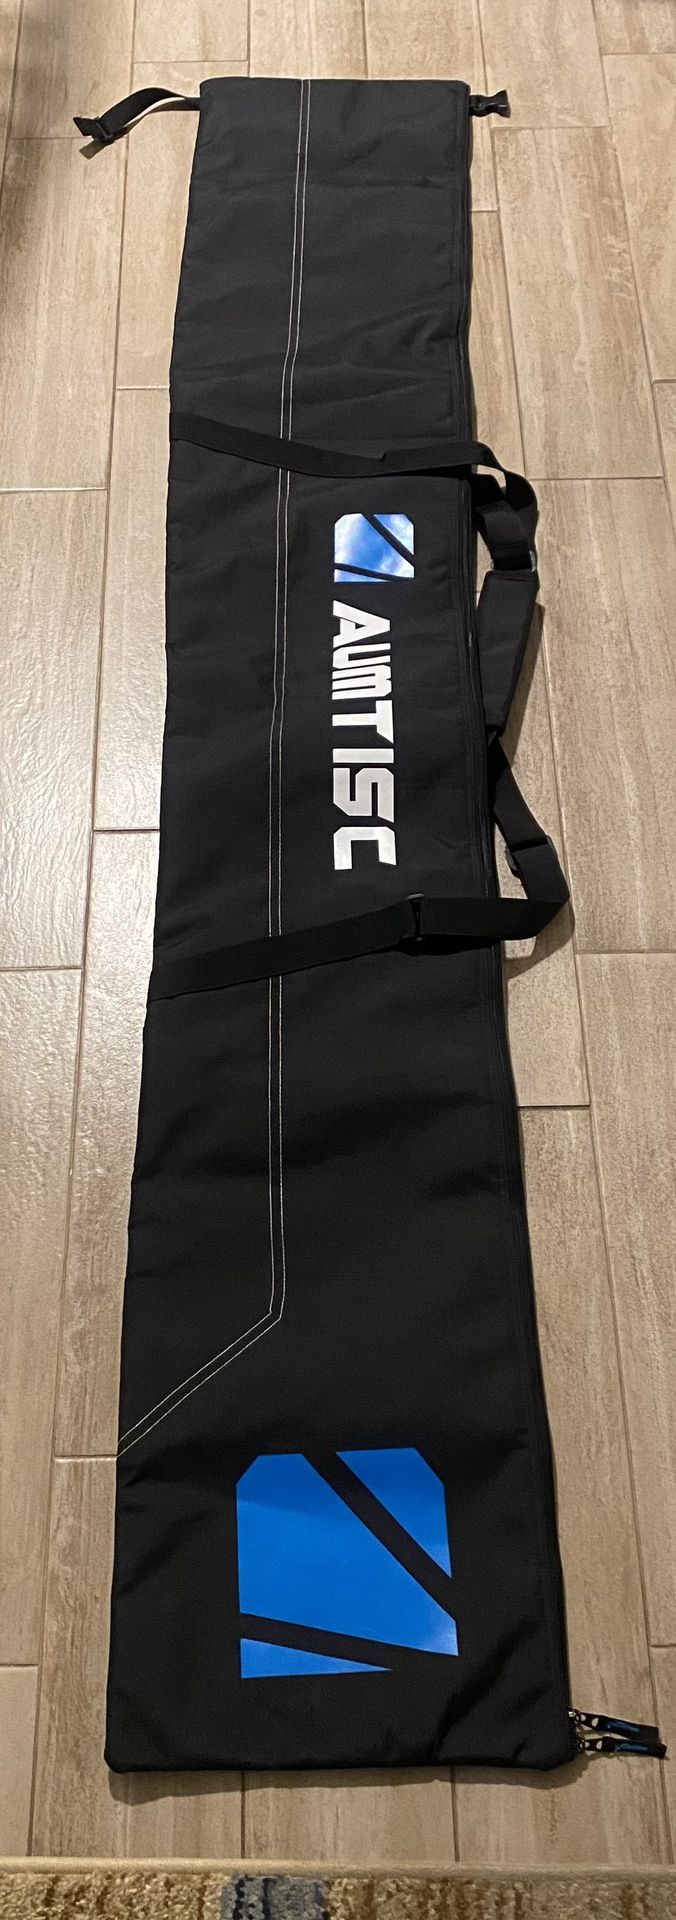 Aumtisc Ski/snowboard Bag